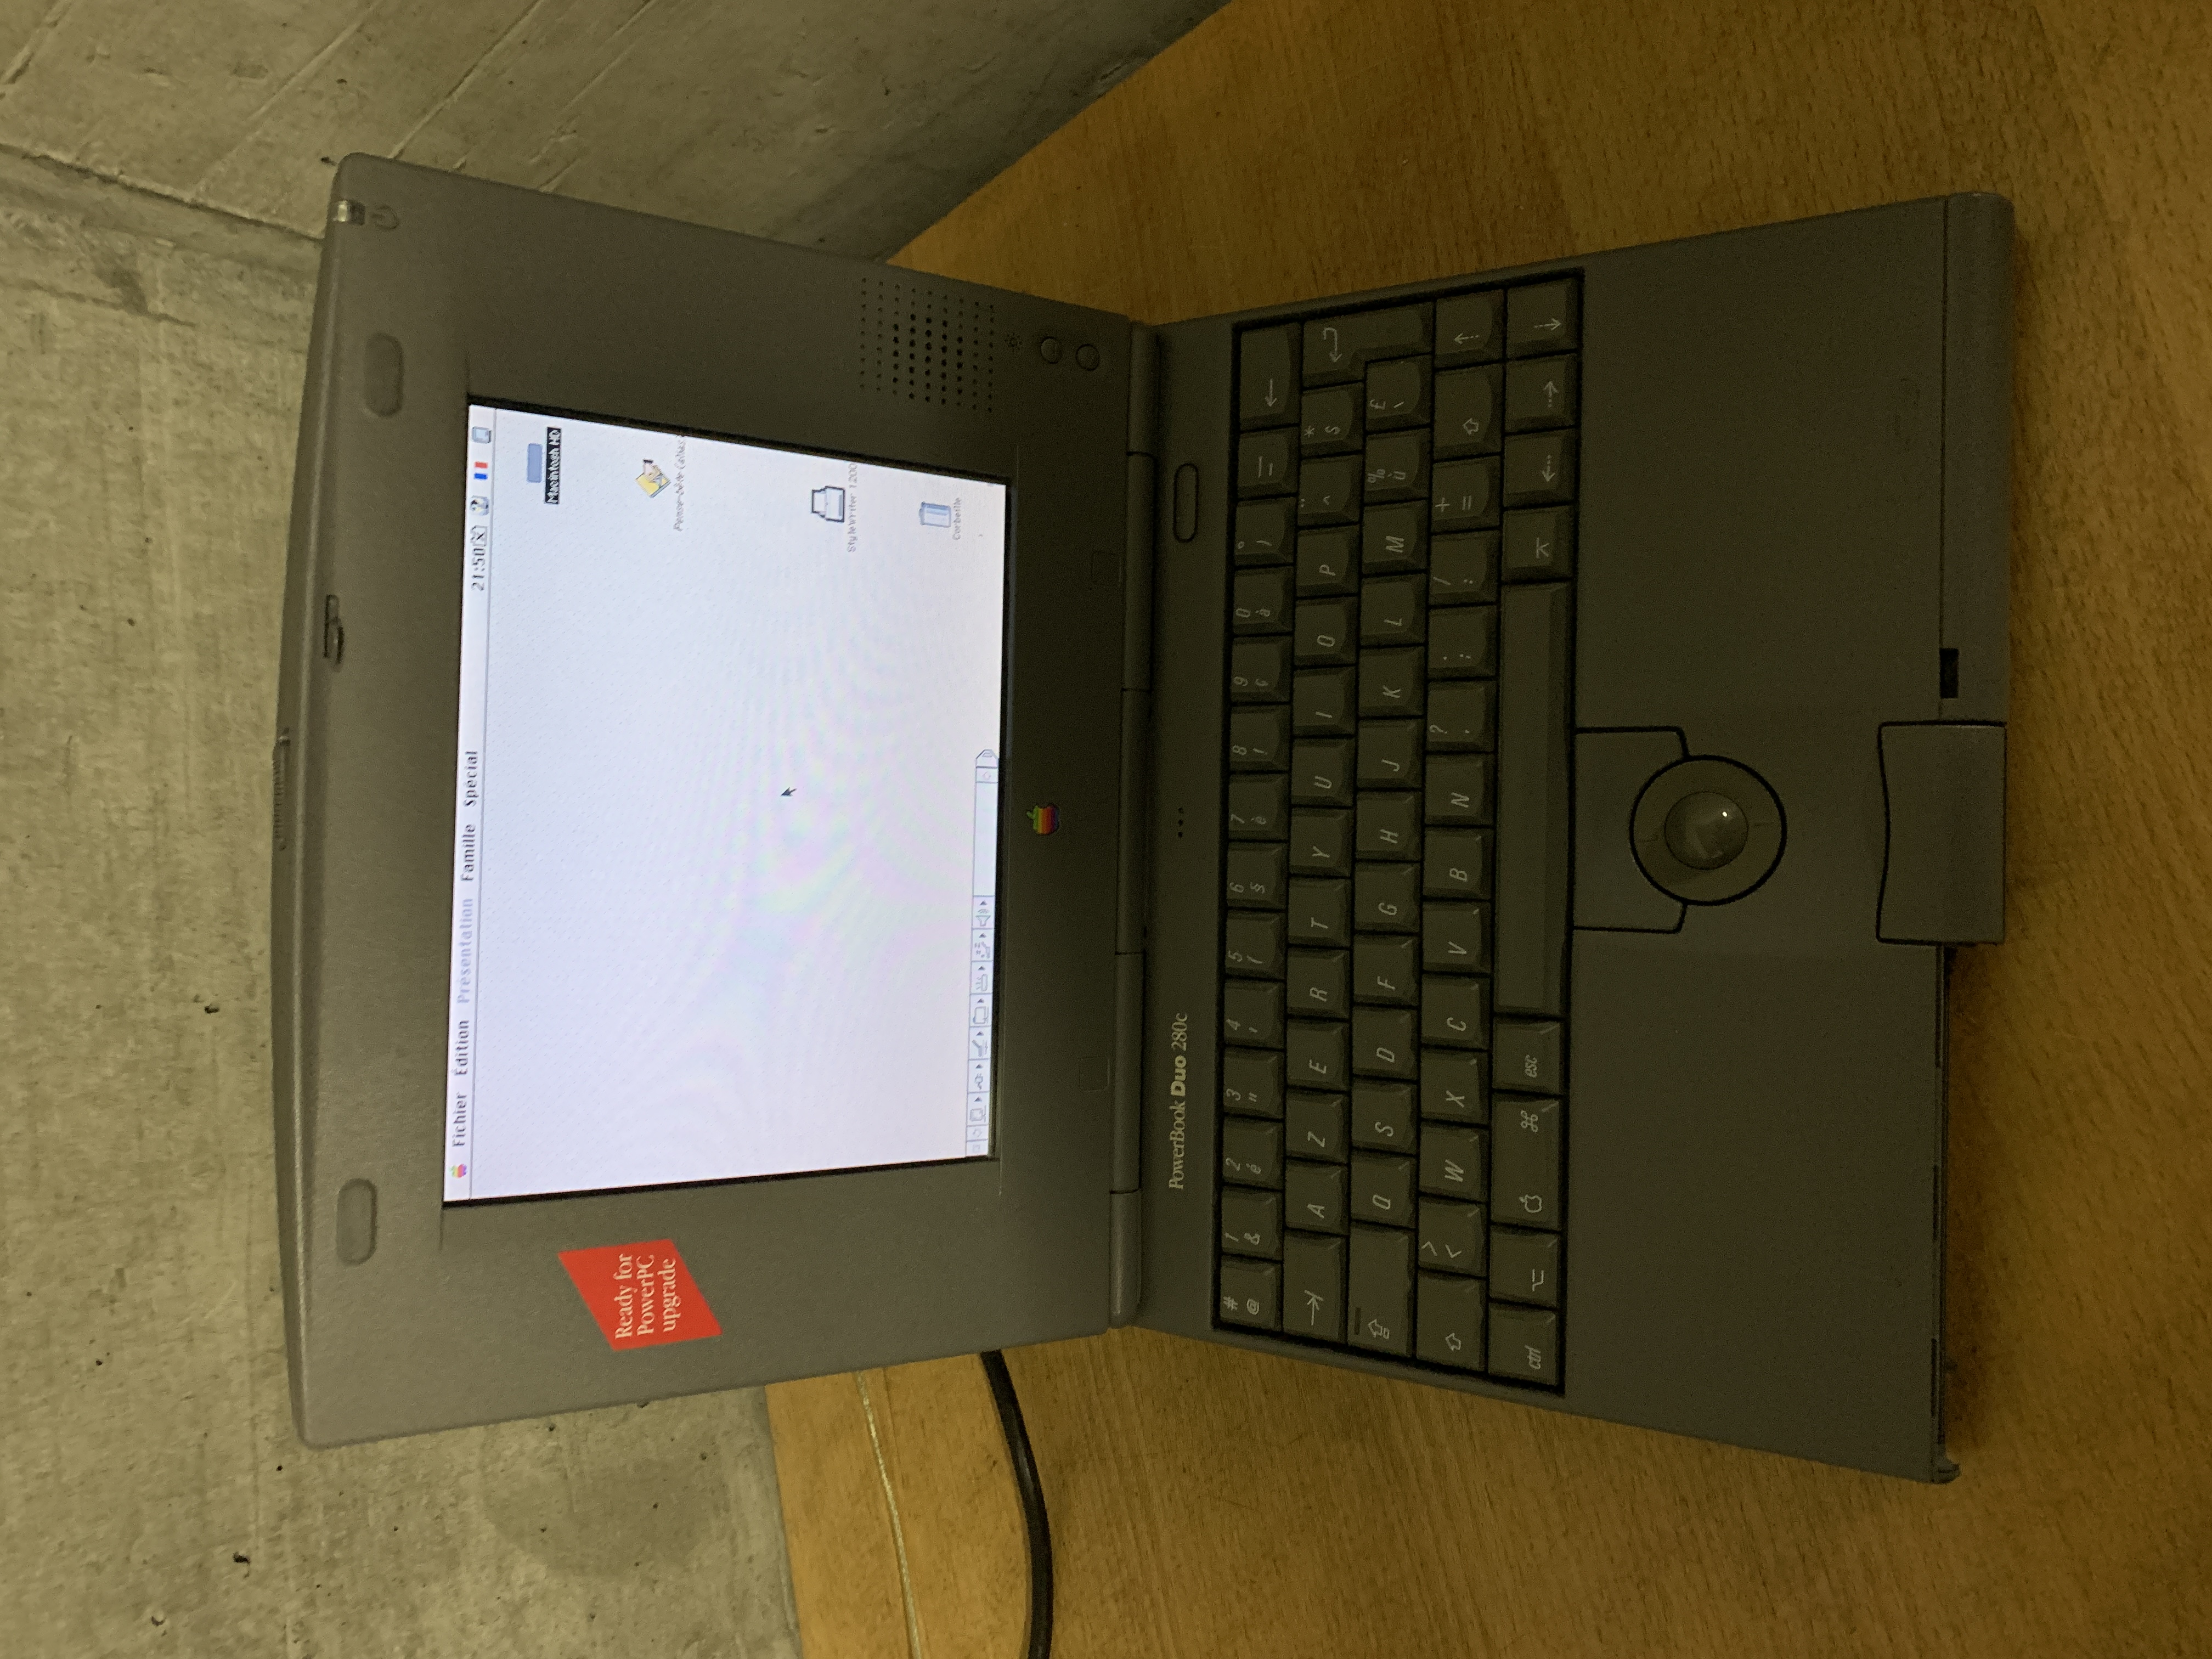 PowerBook 280c